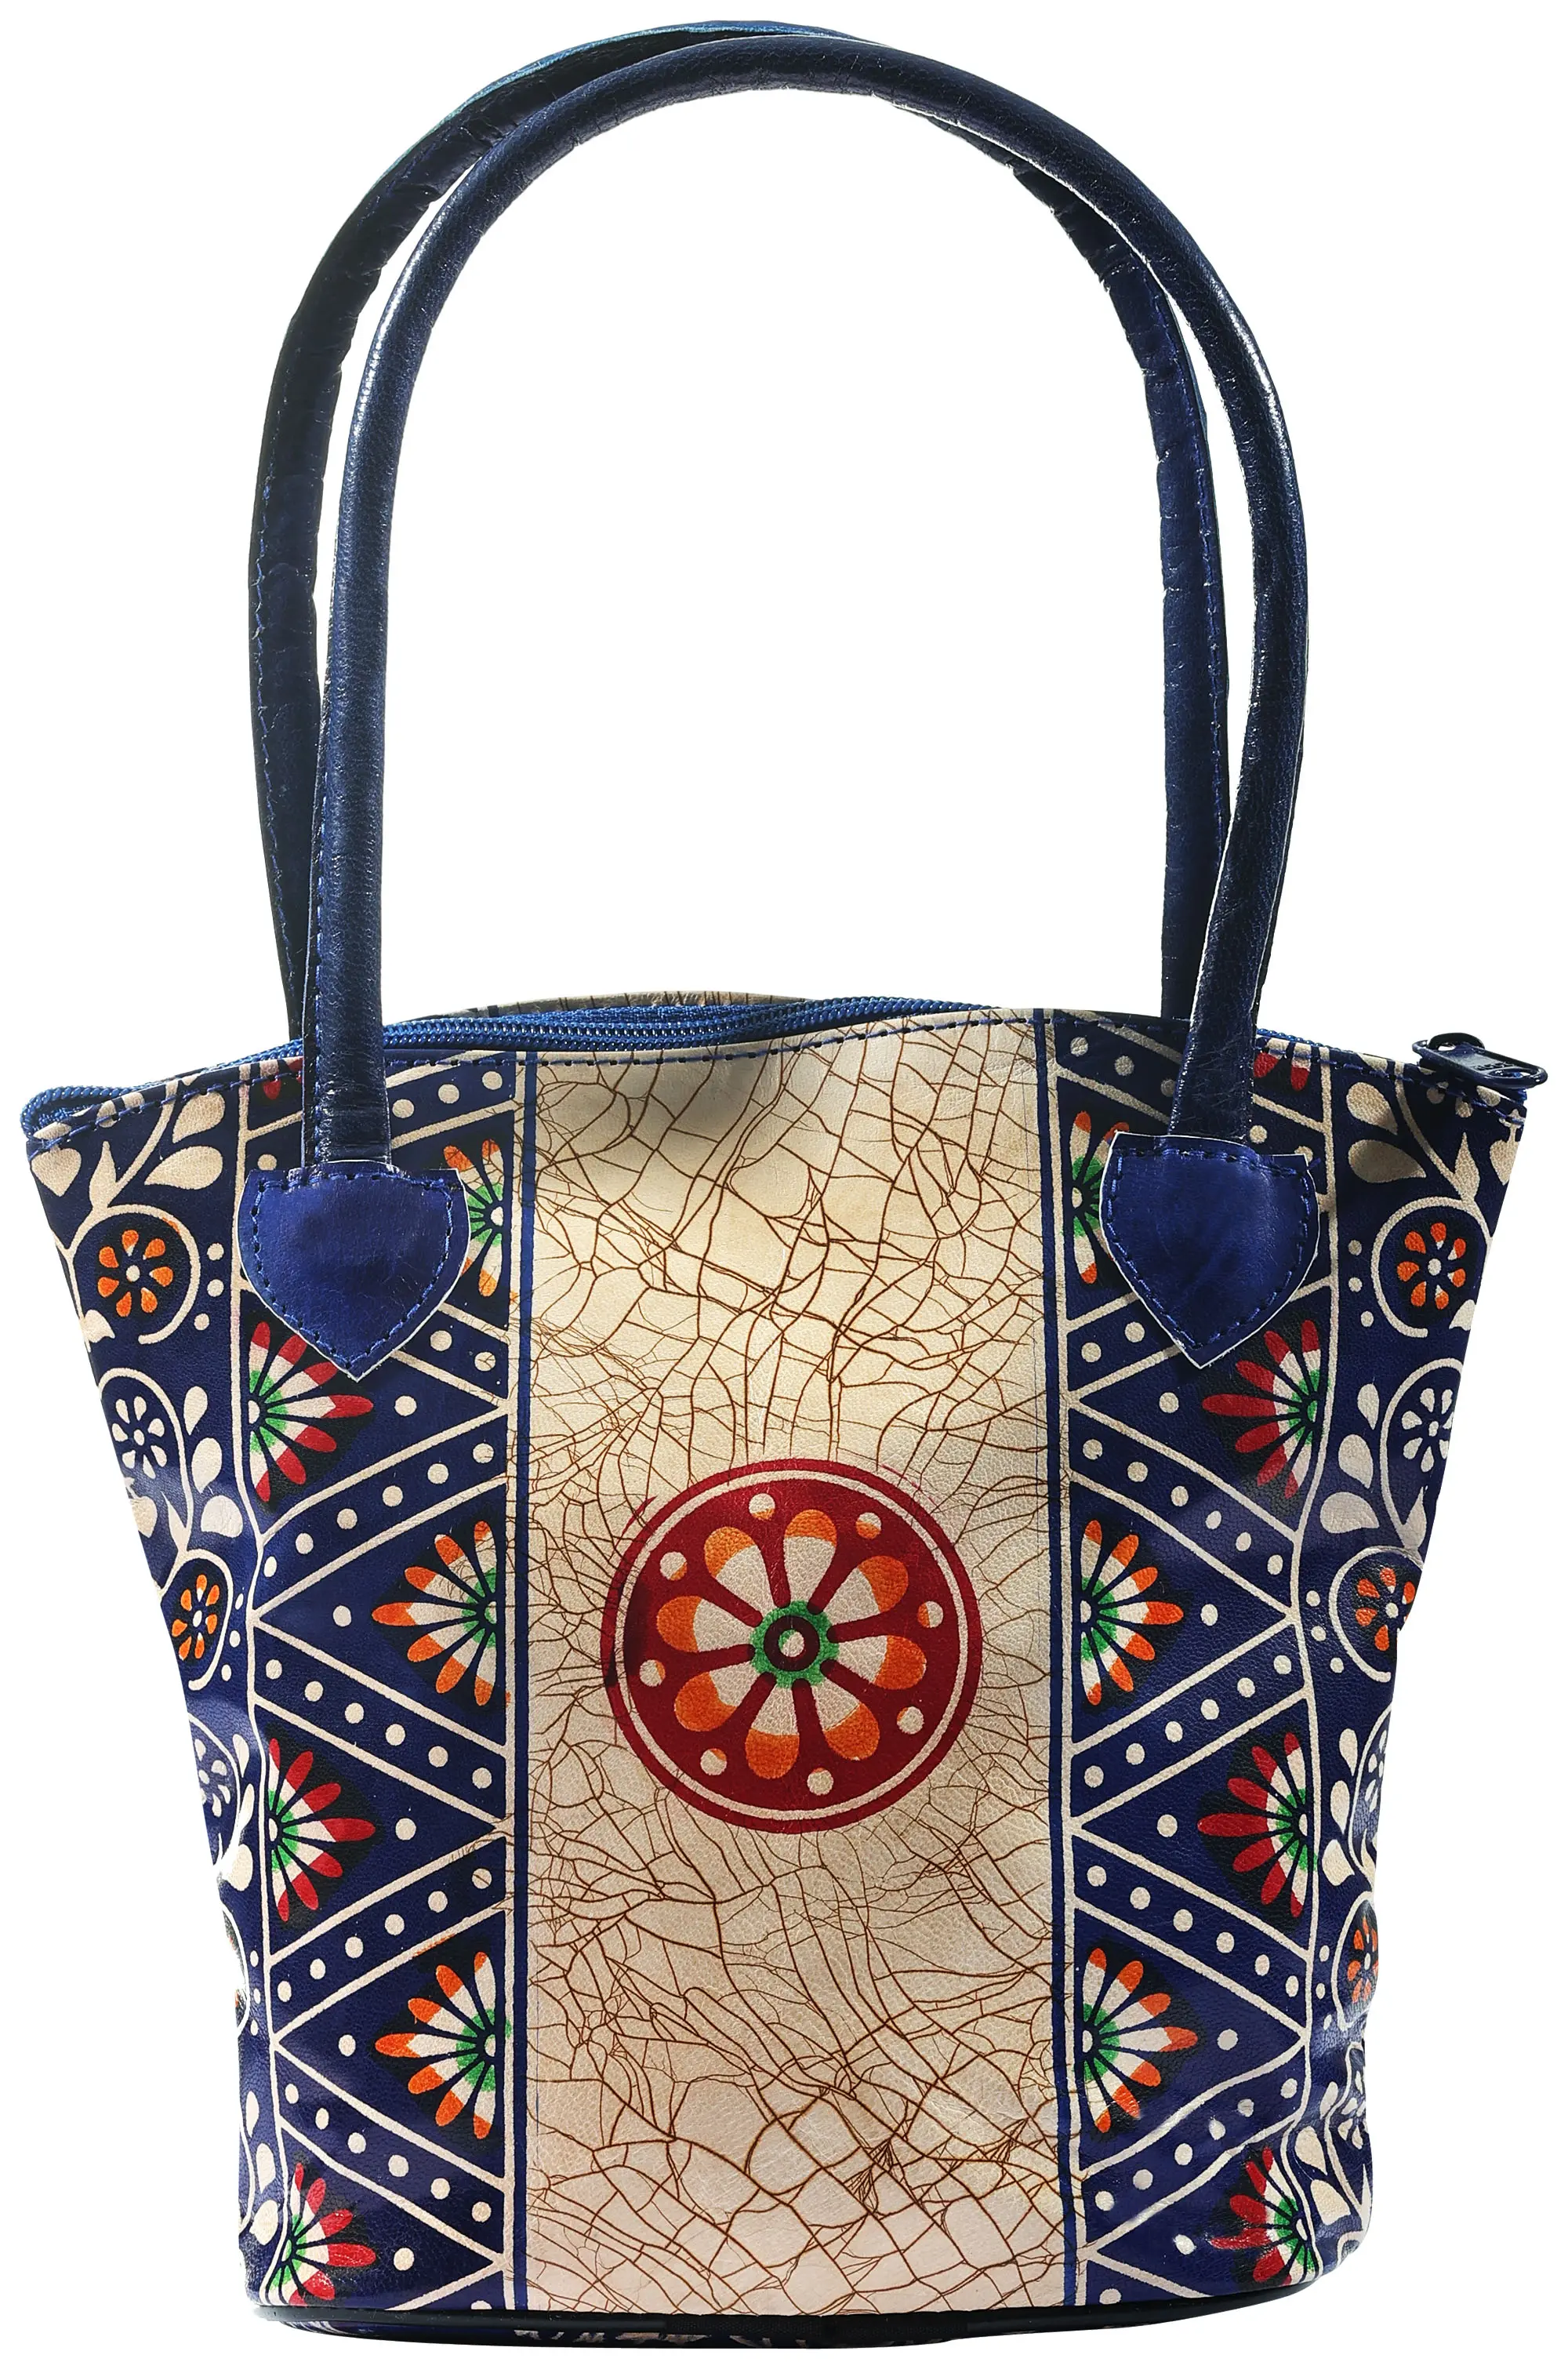 A Shoulder Bag Handle Satchel Vintage Tote Bag For Women Purse Messenger Bags Leather Tote Bag For Men Marble Geometric Shapes Gold Printing Art Tote Bag 